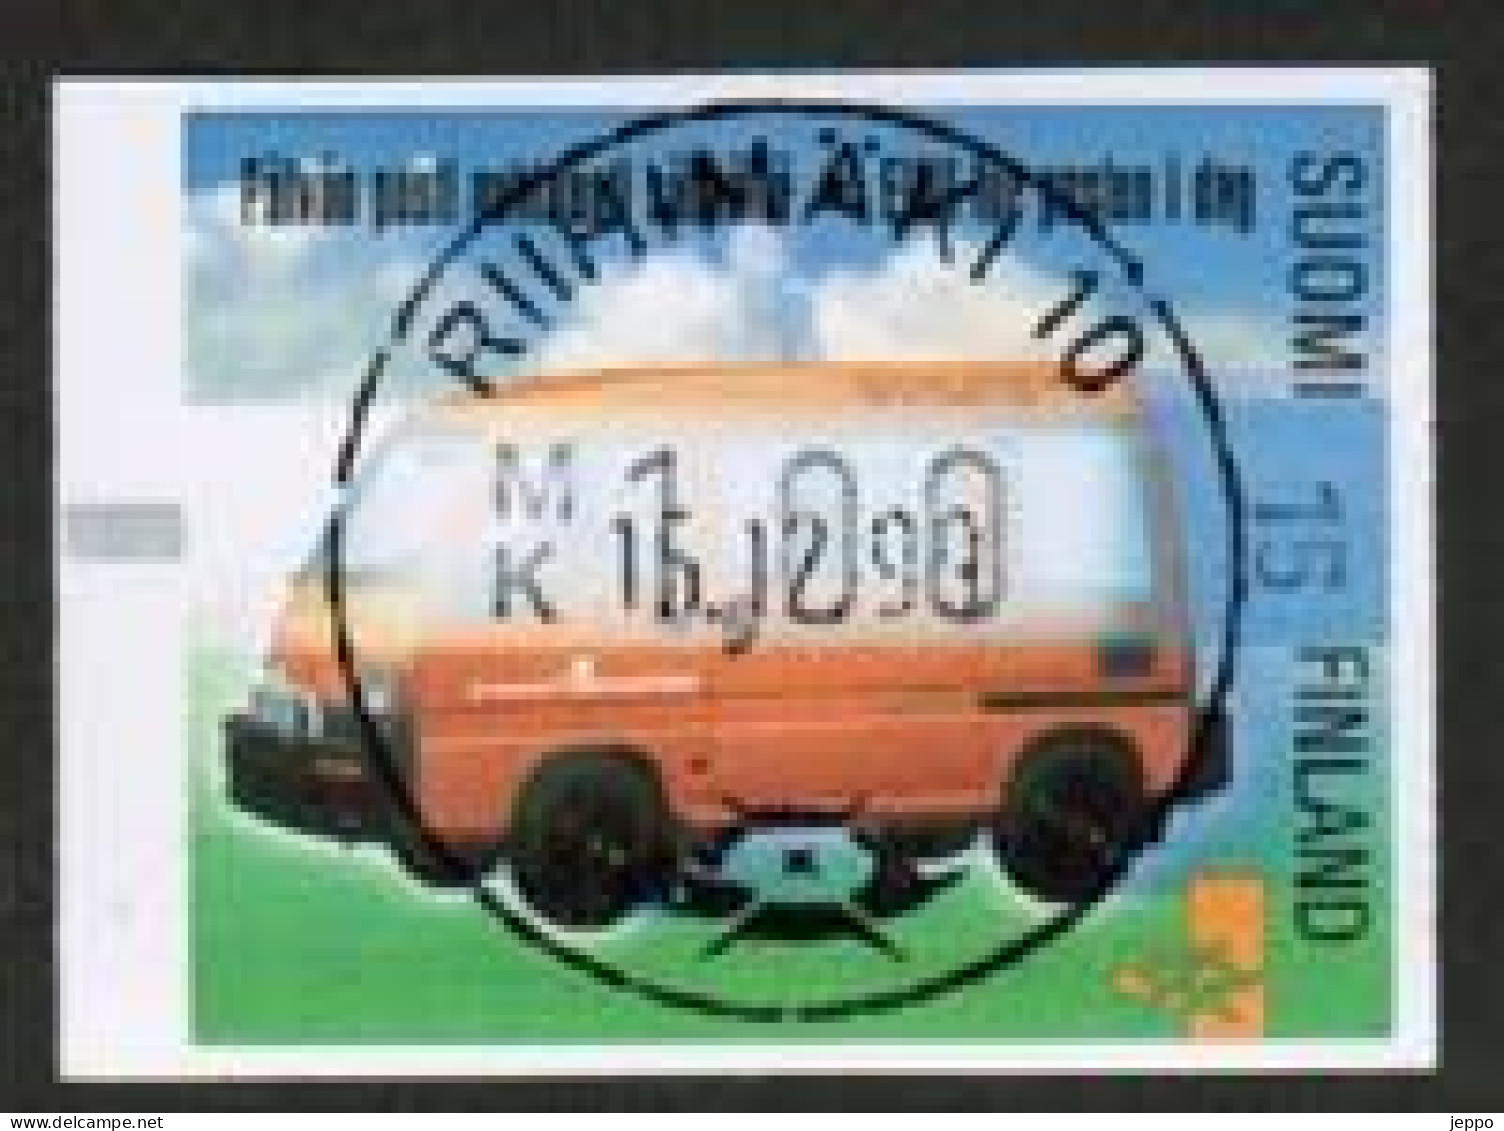 1999 Finland ATM Michel 33, Electric Post Car Fine Used Label. - Automatenmarken [ATM]